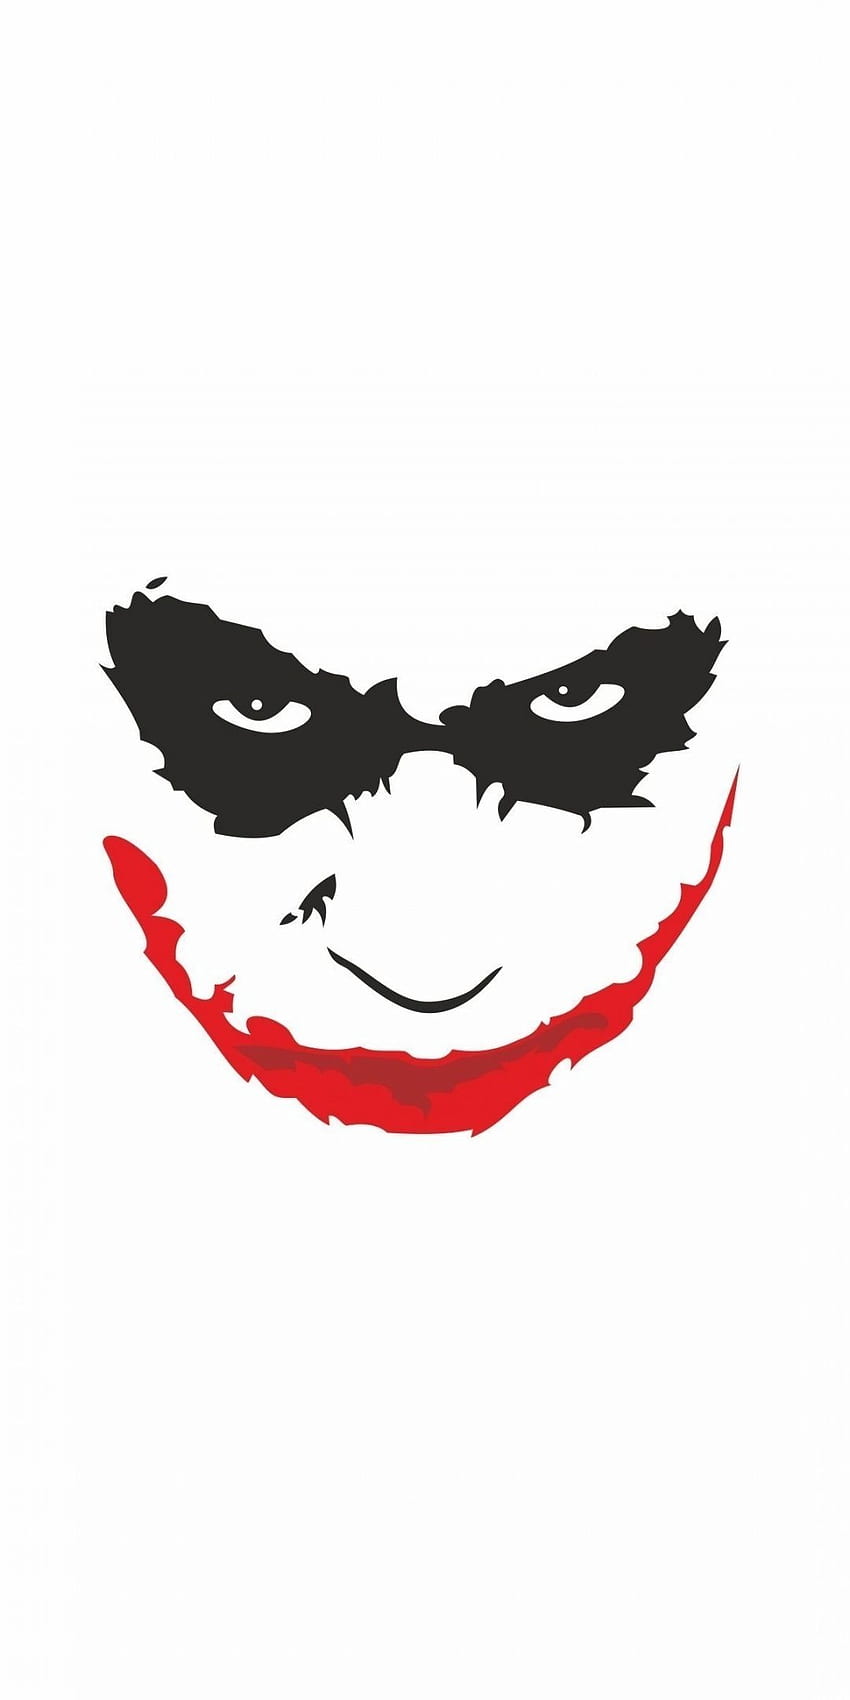 20+ Dark Evil Clown Face Scary Joker Smile Drawing Illustrations,  Royalty-Free Vector Graphics & Clip Art - iStock